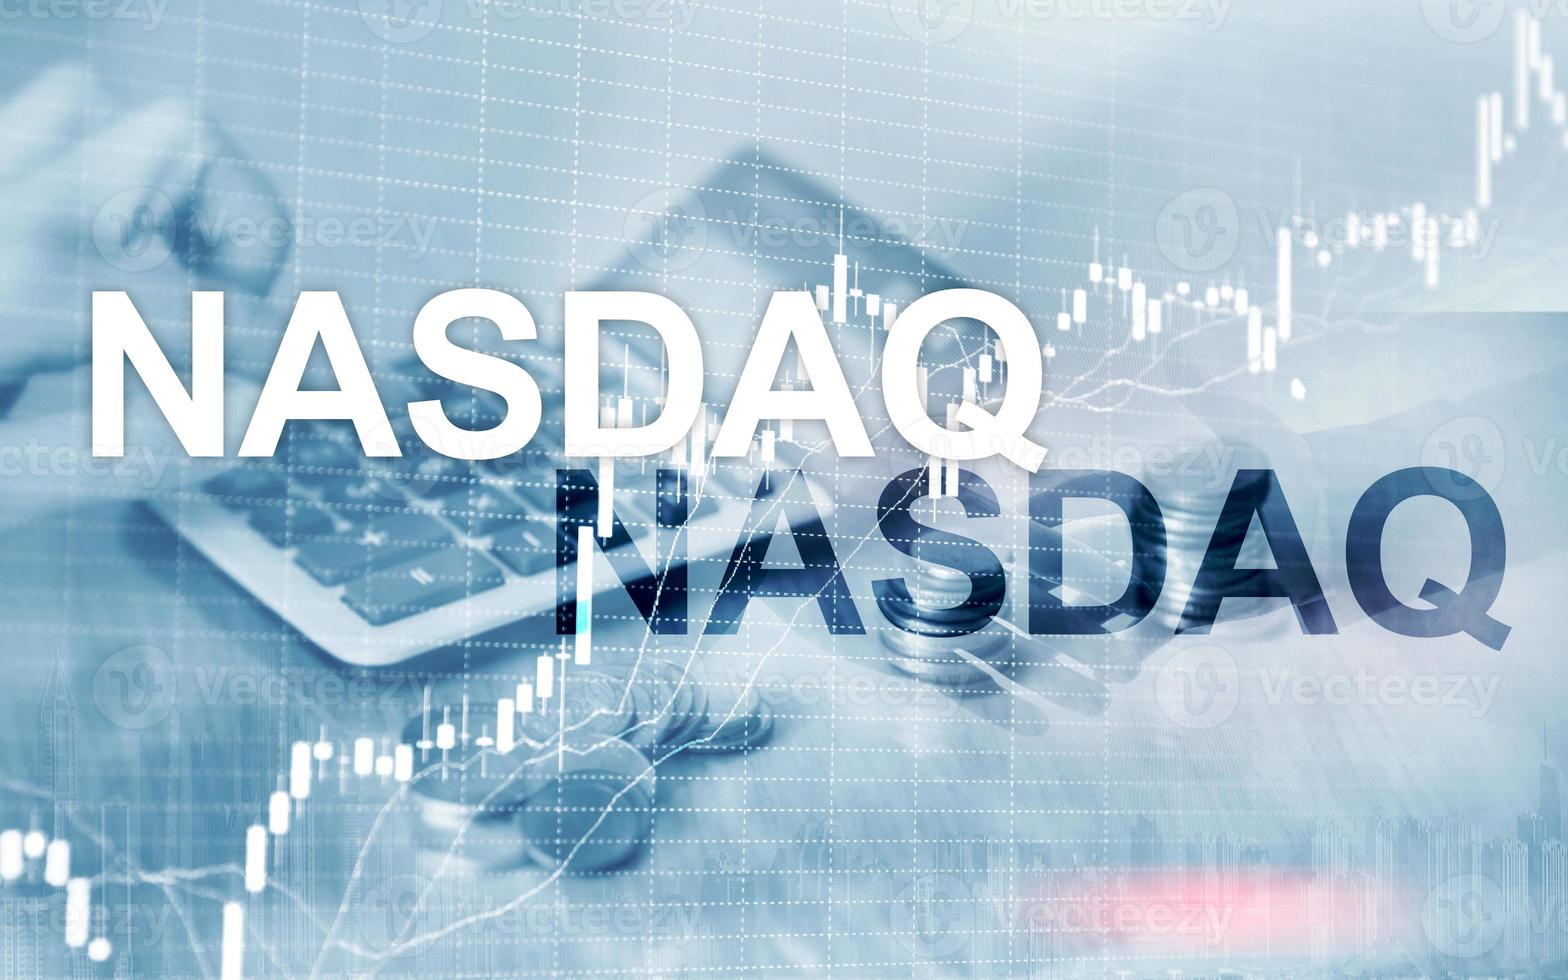 National Association of Securities Dealers Automated Quotation. NASDAQ. photo